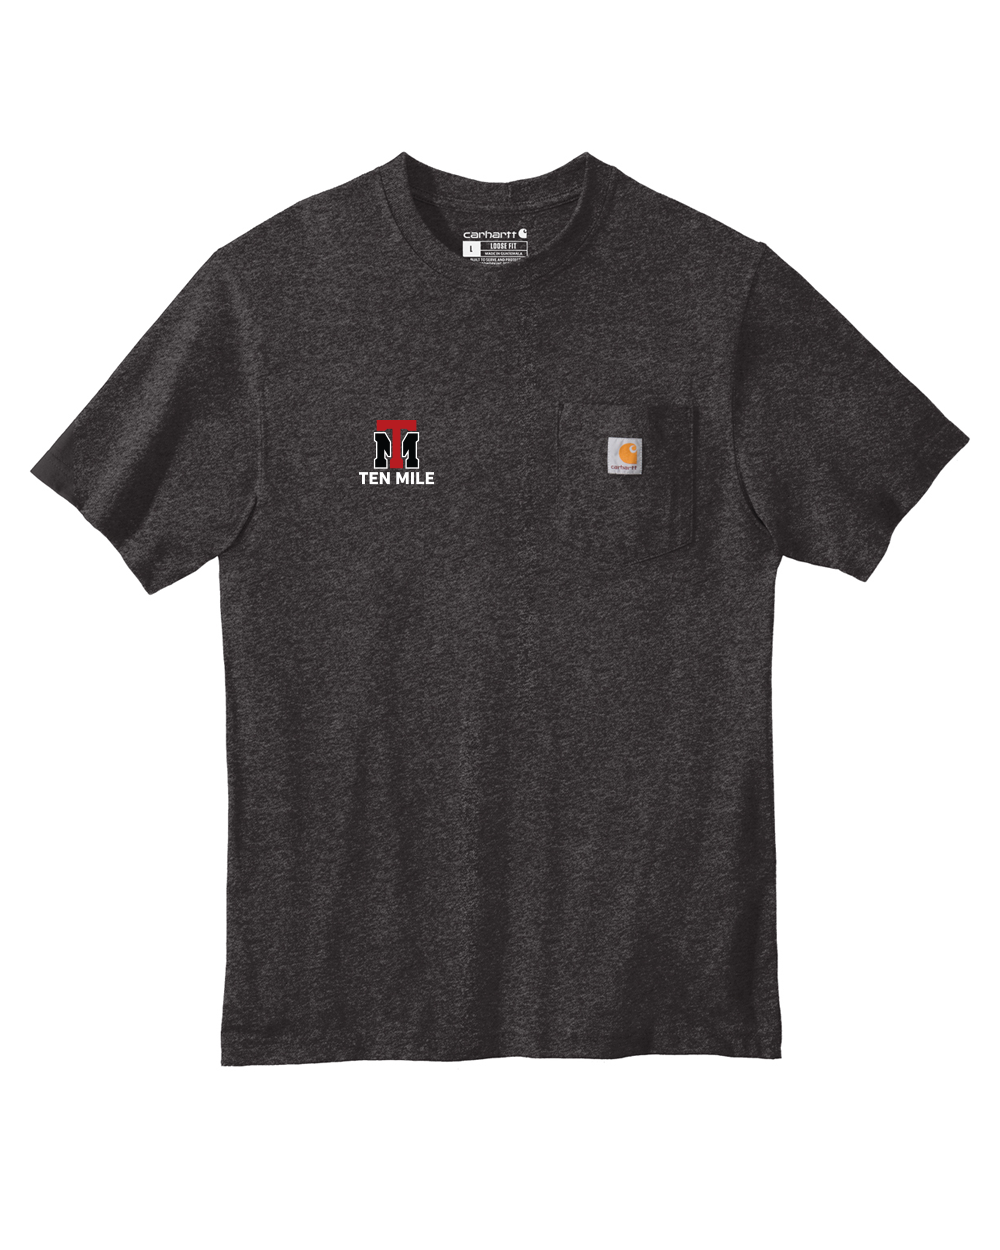 Ten Mile - Carhartt Workwear Pocket Short Sleeve T-Shirt